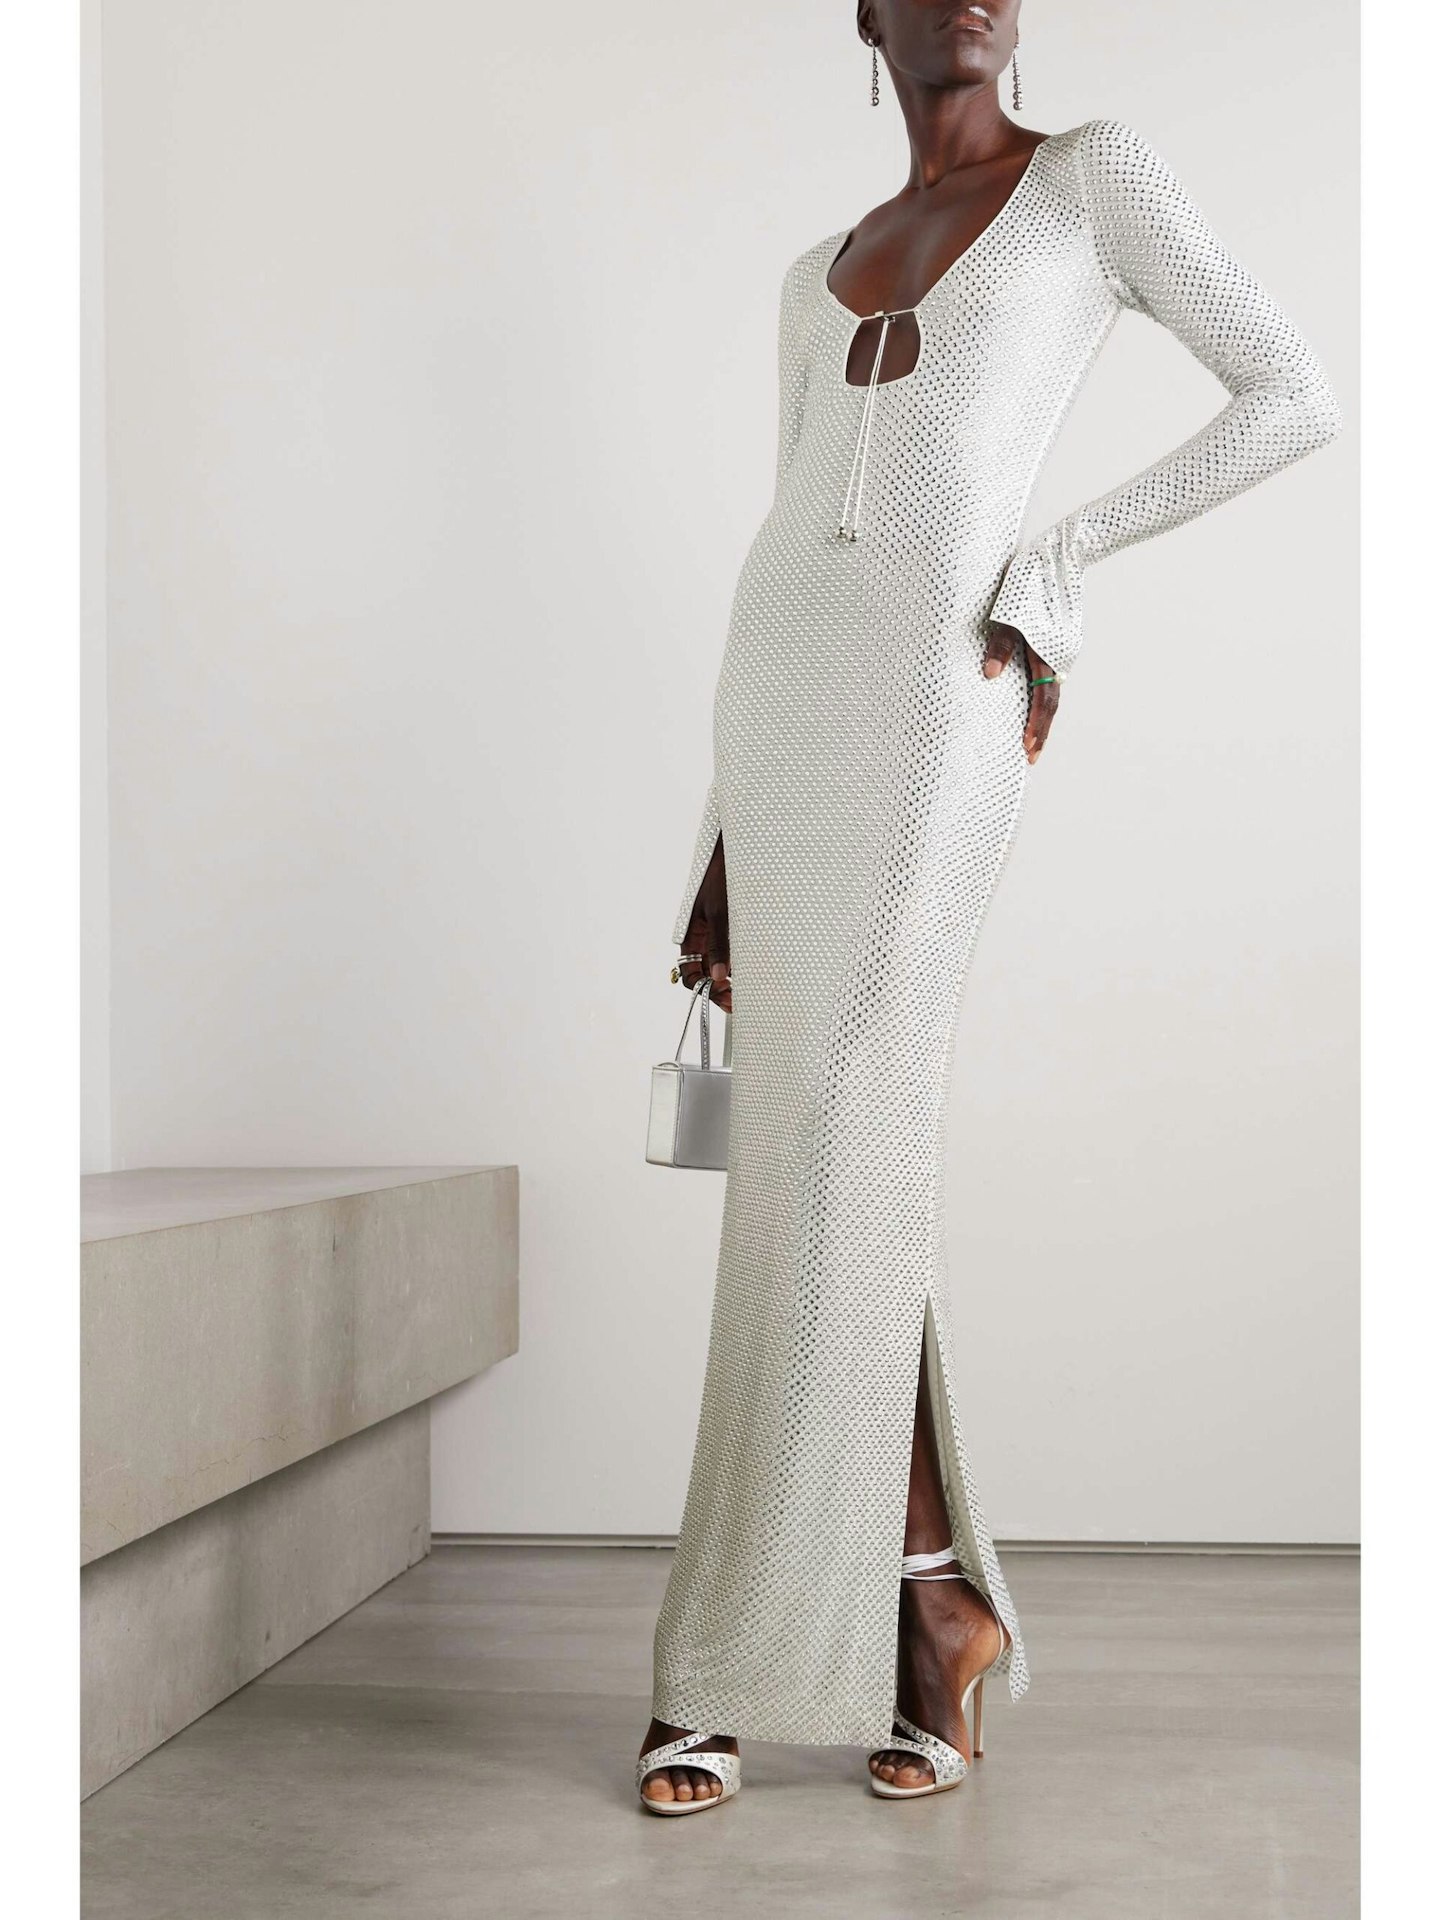 16Arlington, Solaria Crystal-Embellished Mesh Maxi Dress